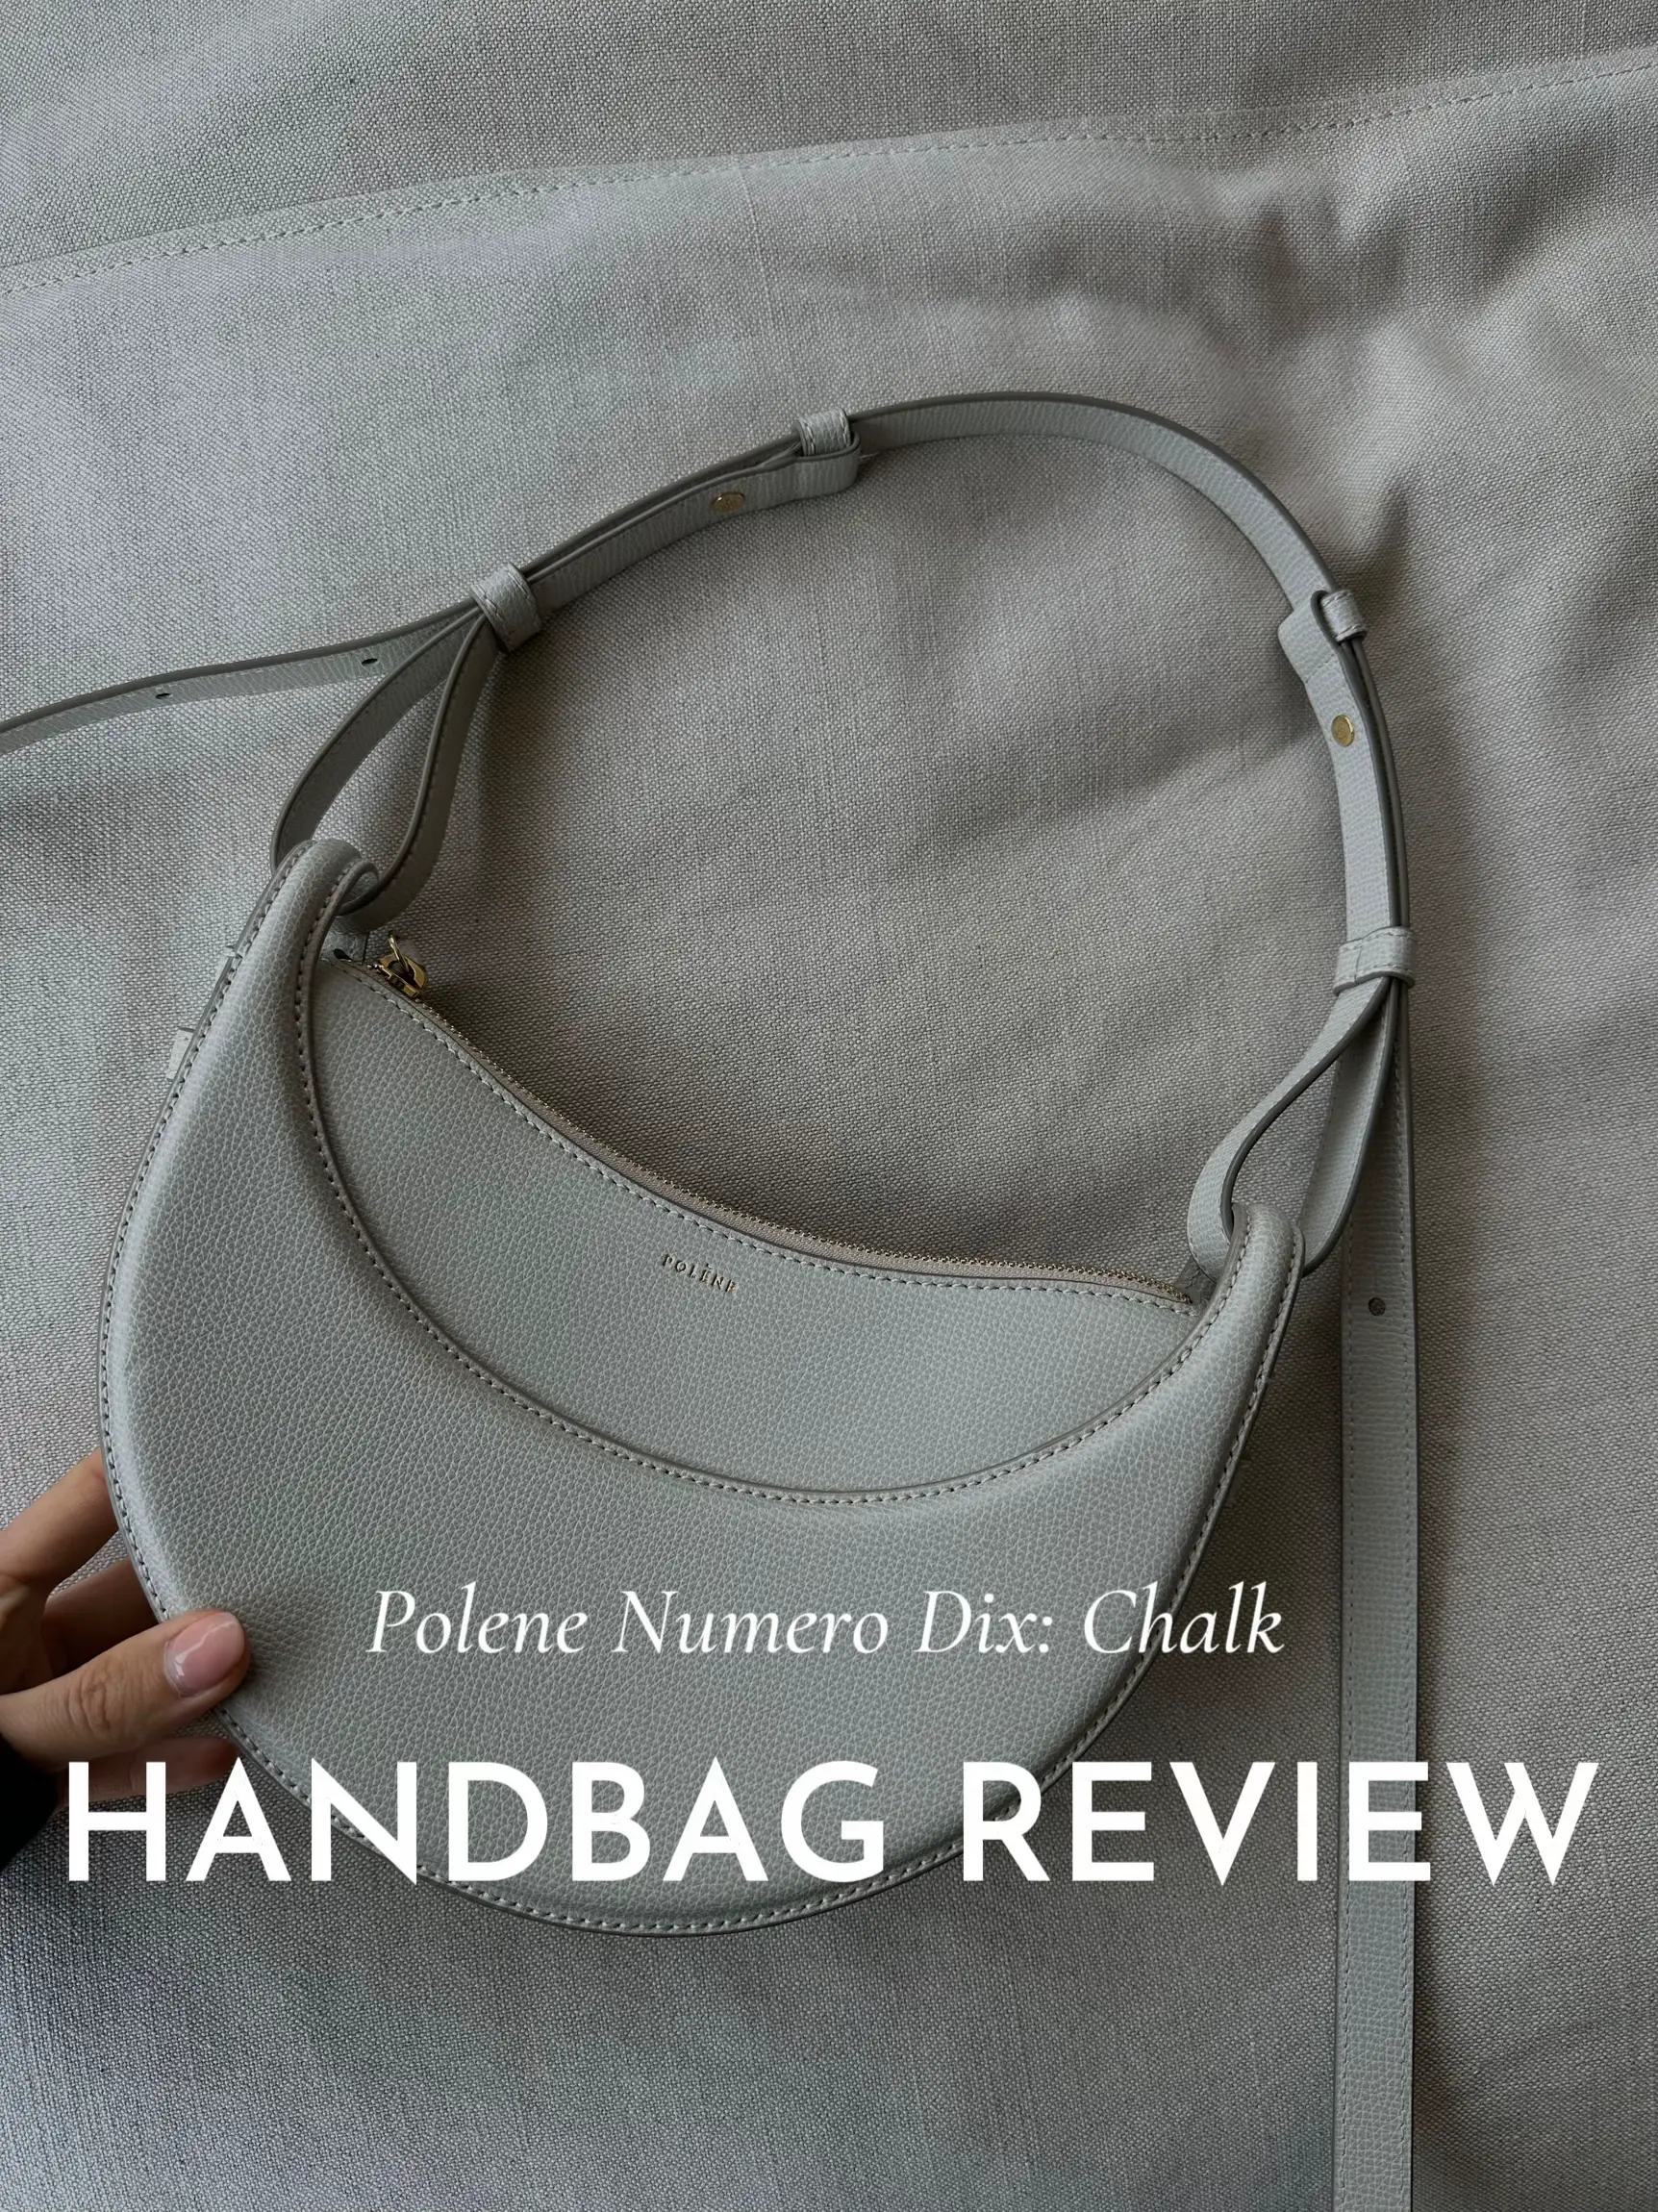 quality of Polene Numero Dix? : r/handbags